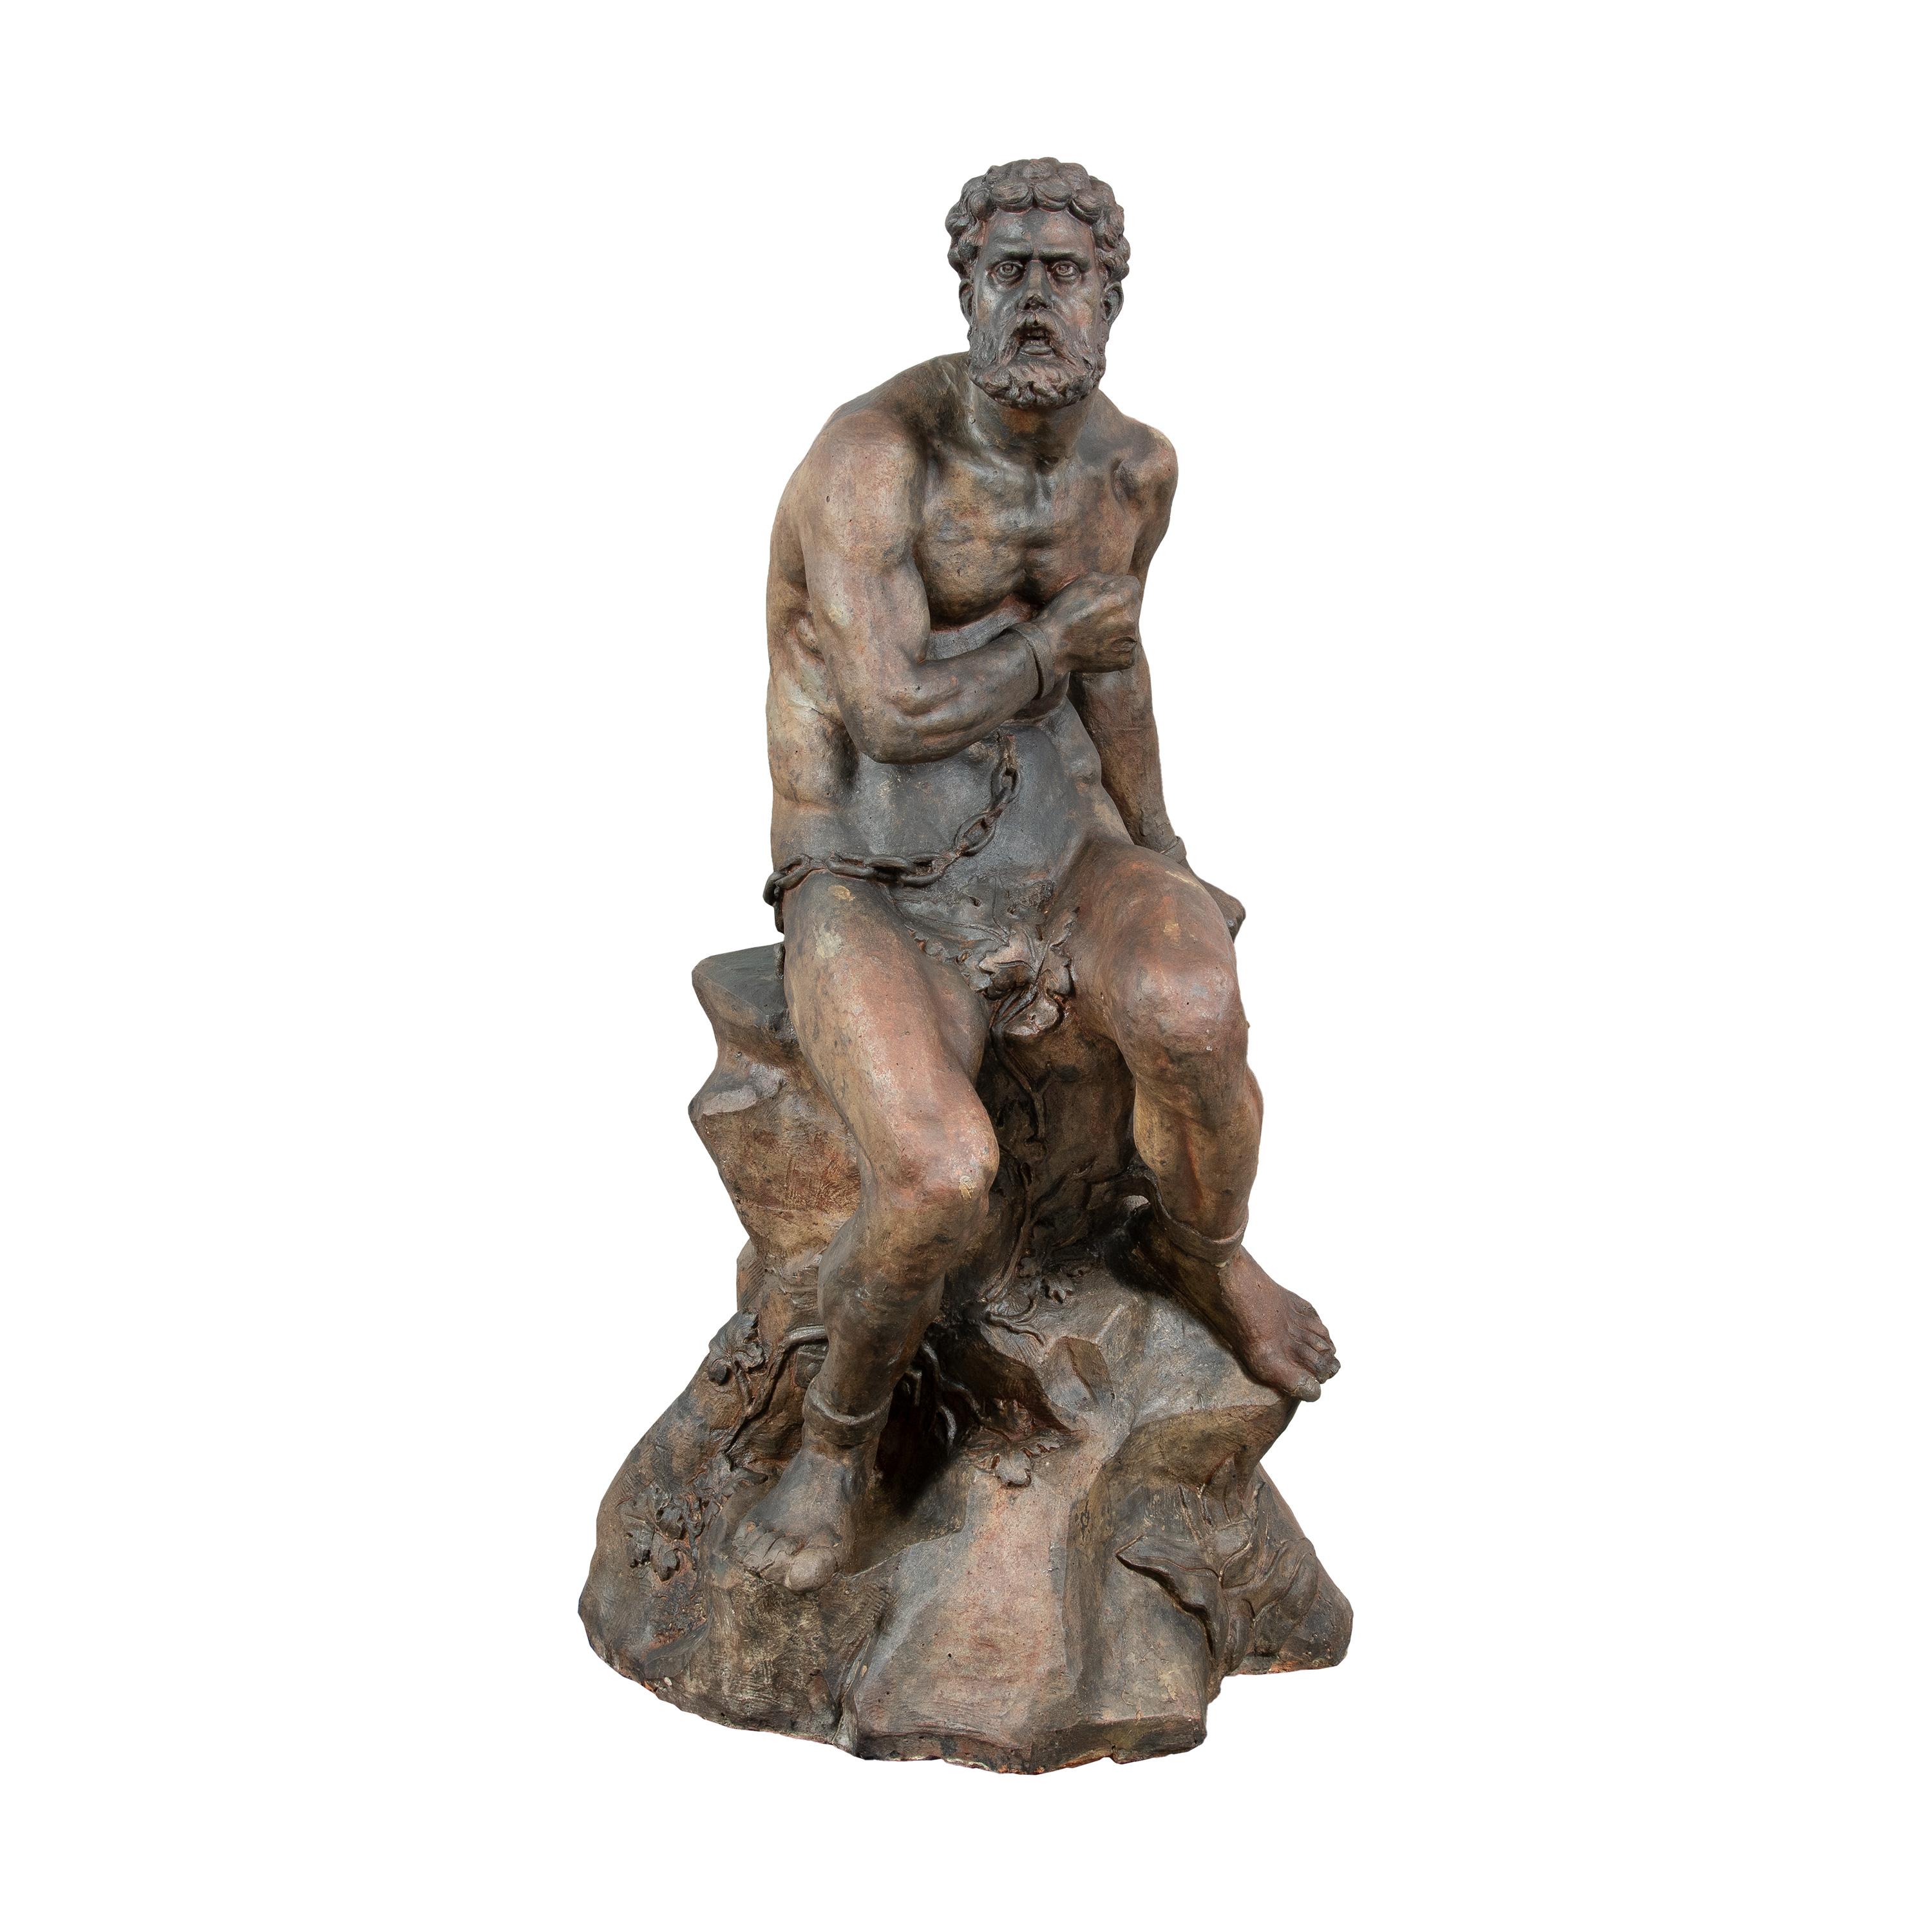 Baroque master sculptor - 18th century terracotta sculpture - Prometheus figure - Sculpture by Unknown